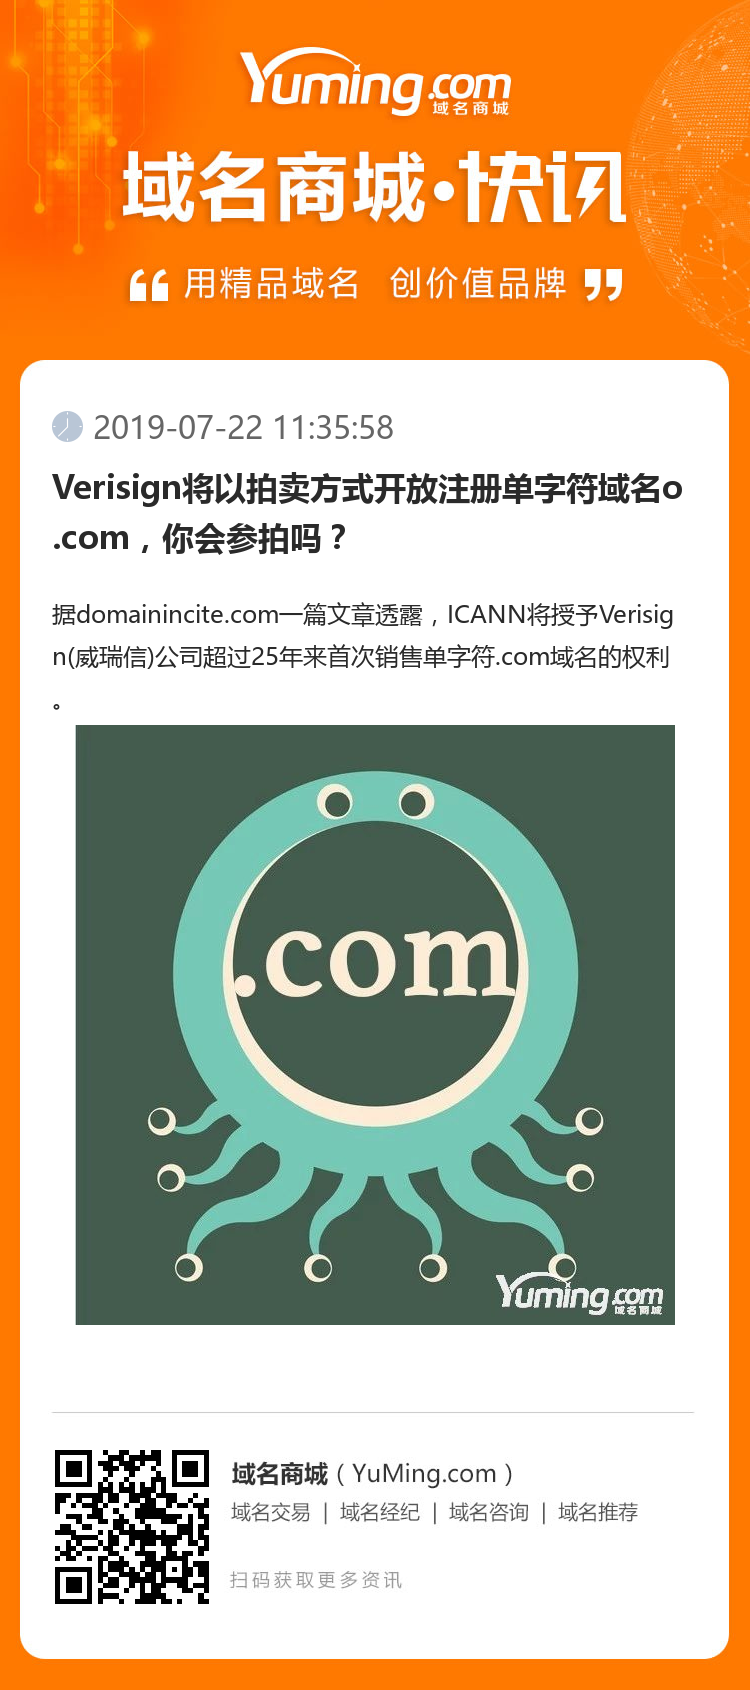 Verisign将以拍卖方式开放注册单字符域名o.com，你会参拍吗？